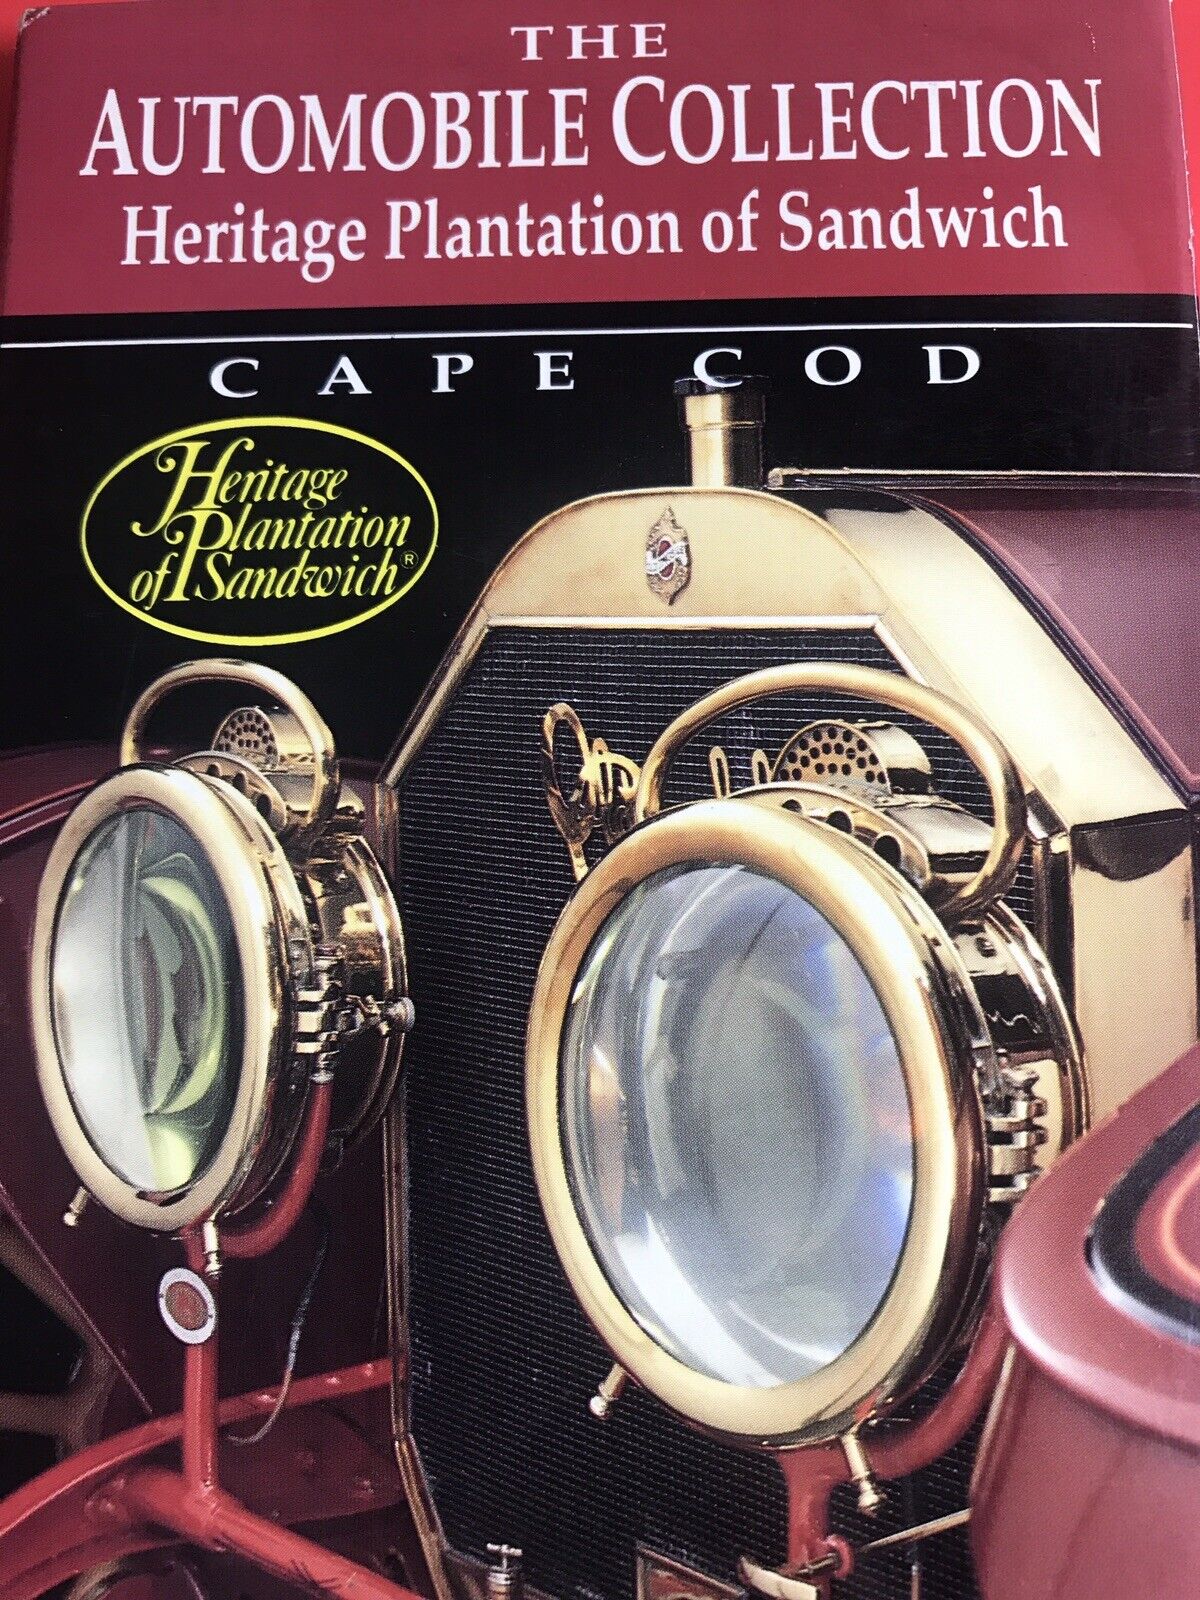 The Automobile Collection: Heritage Plantation of Sandwich (VHS) Cape Cod 1993 